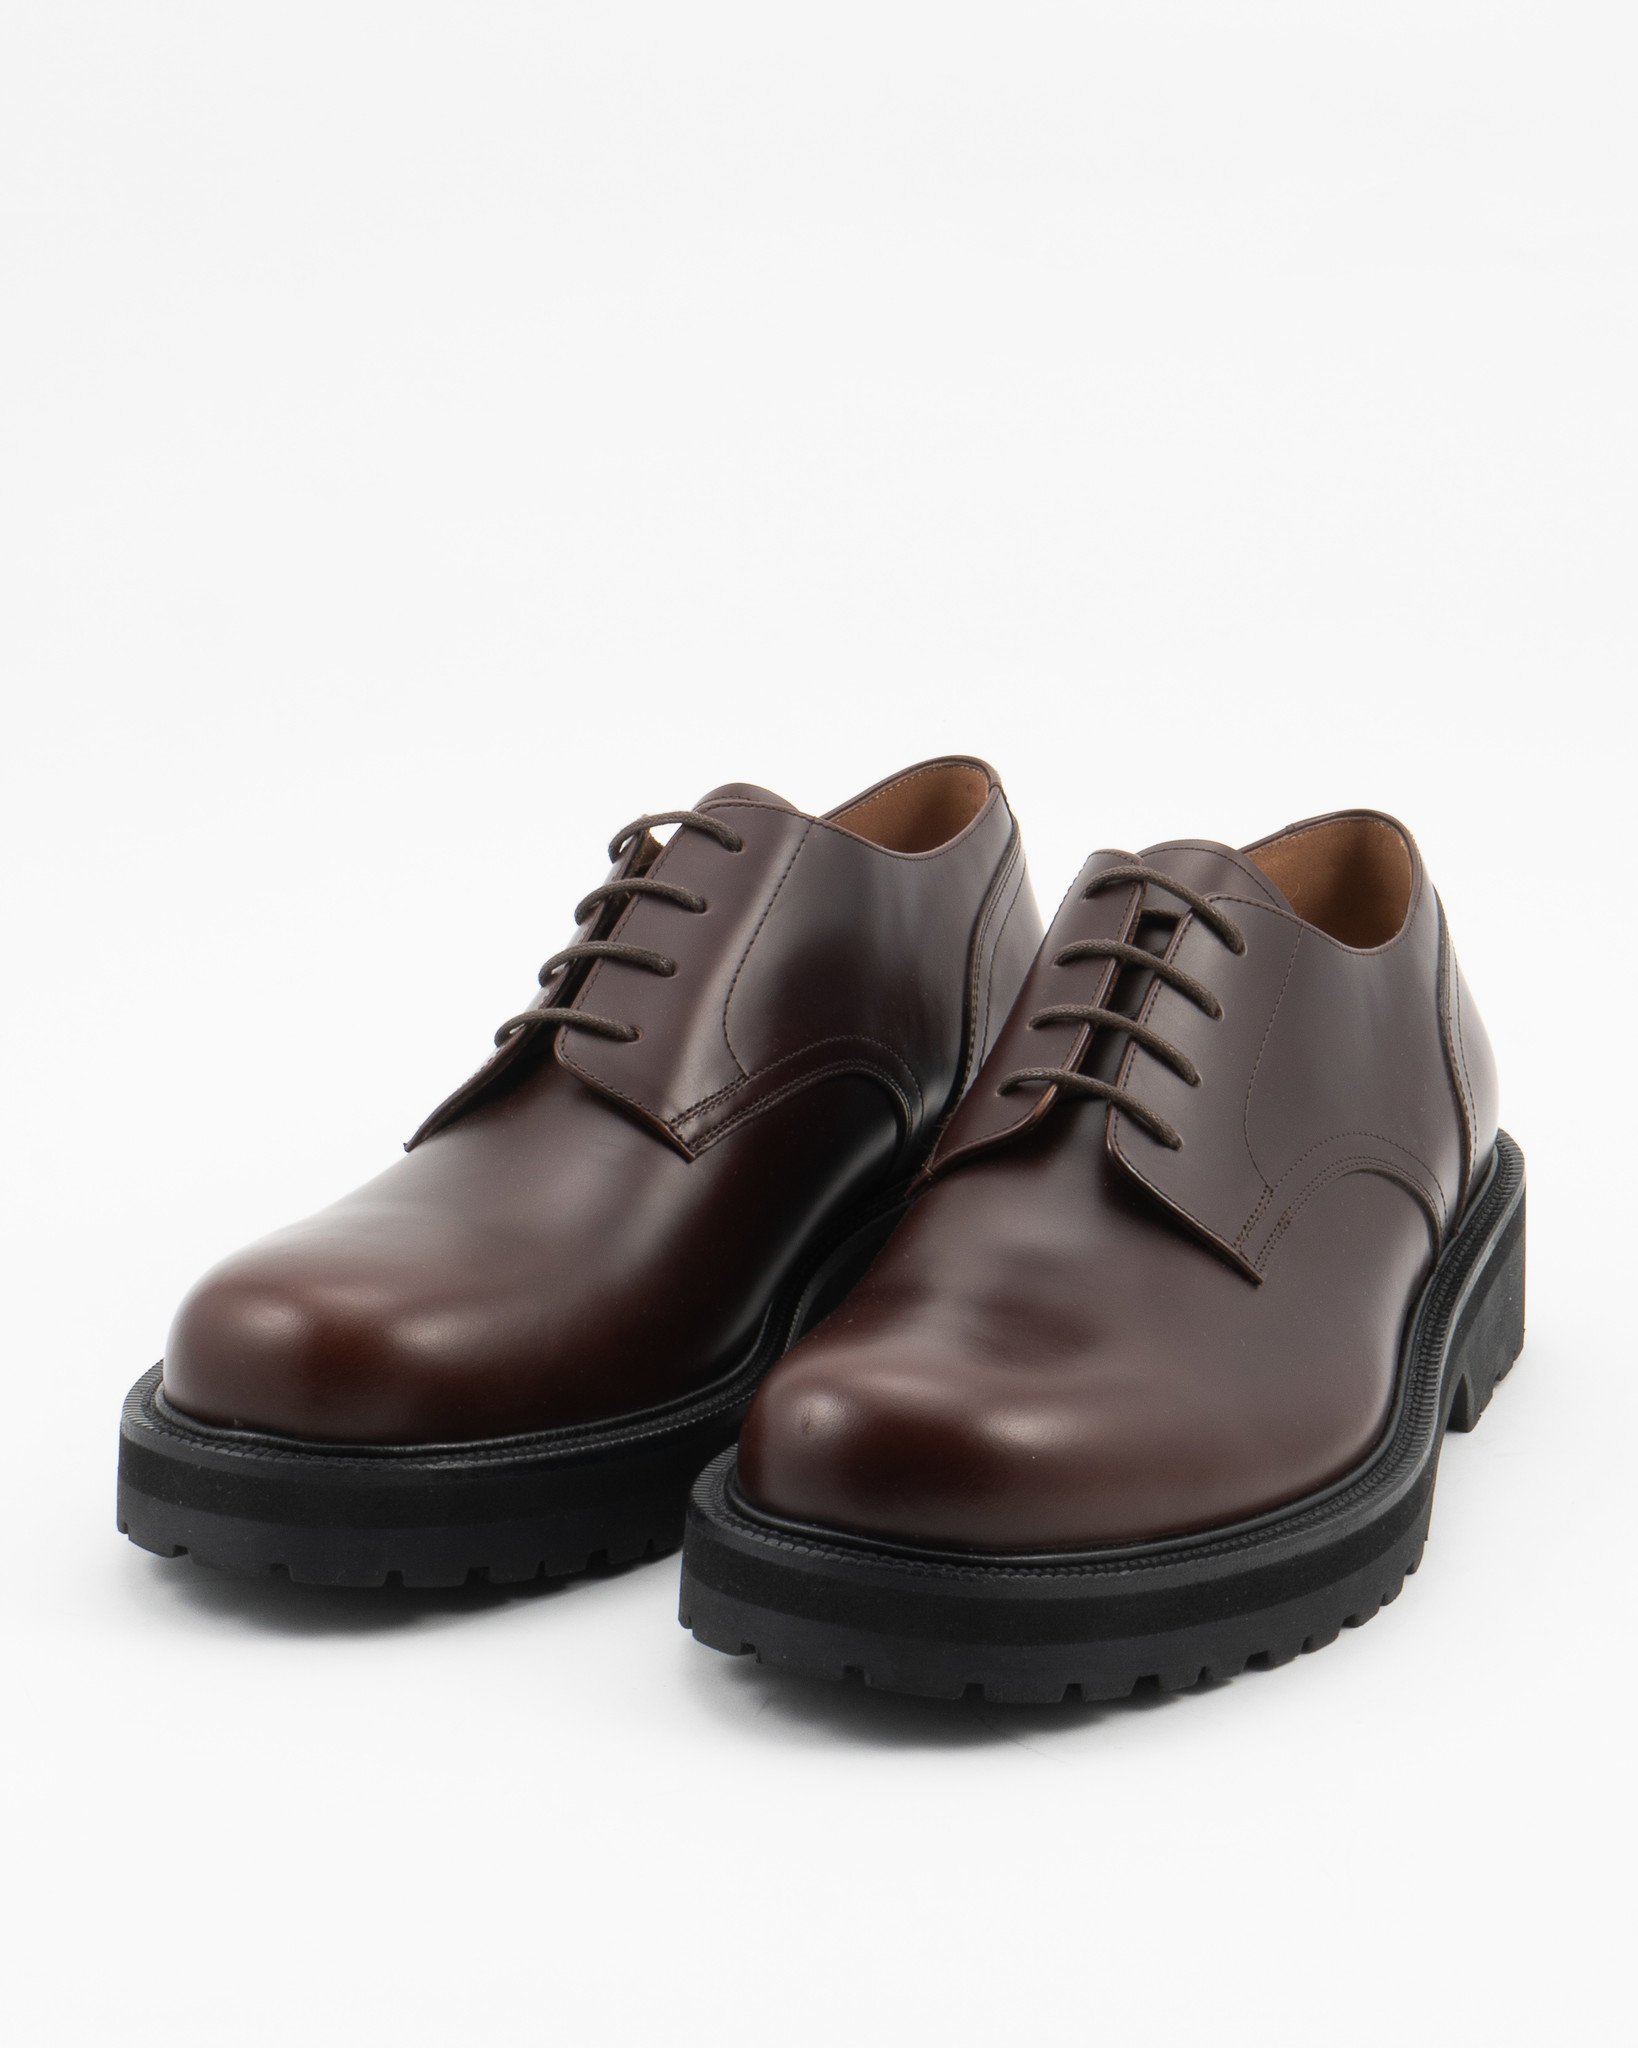 dries-van-noten-brown-leather-shoes.jpg